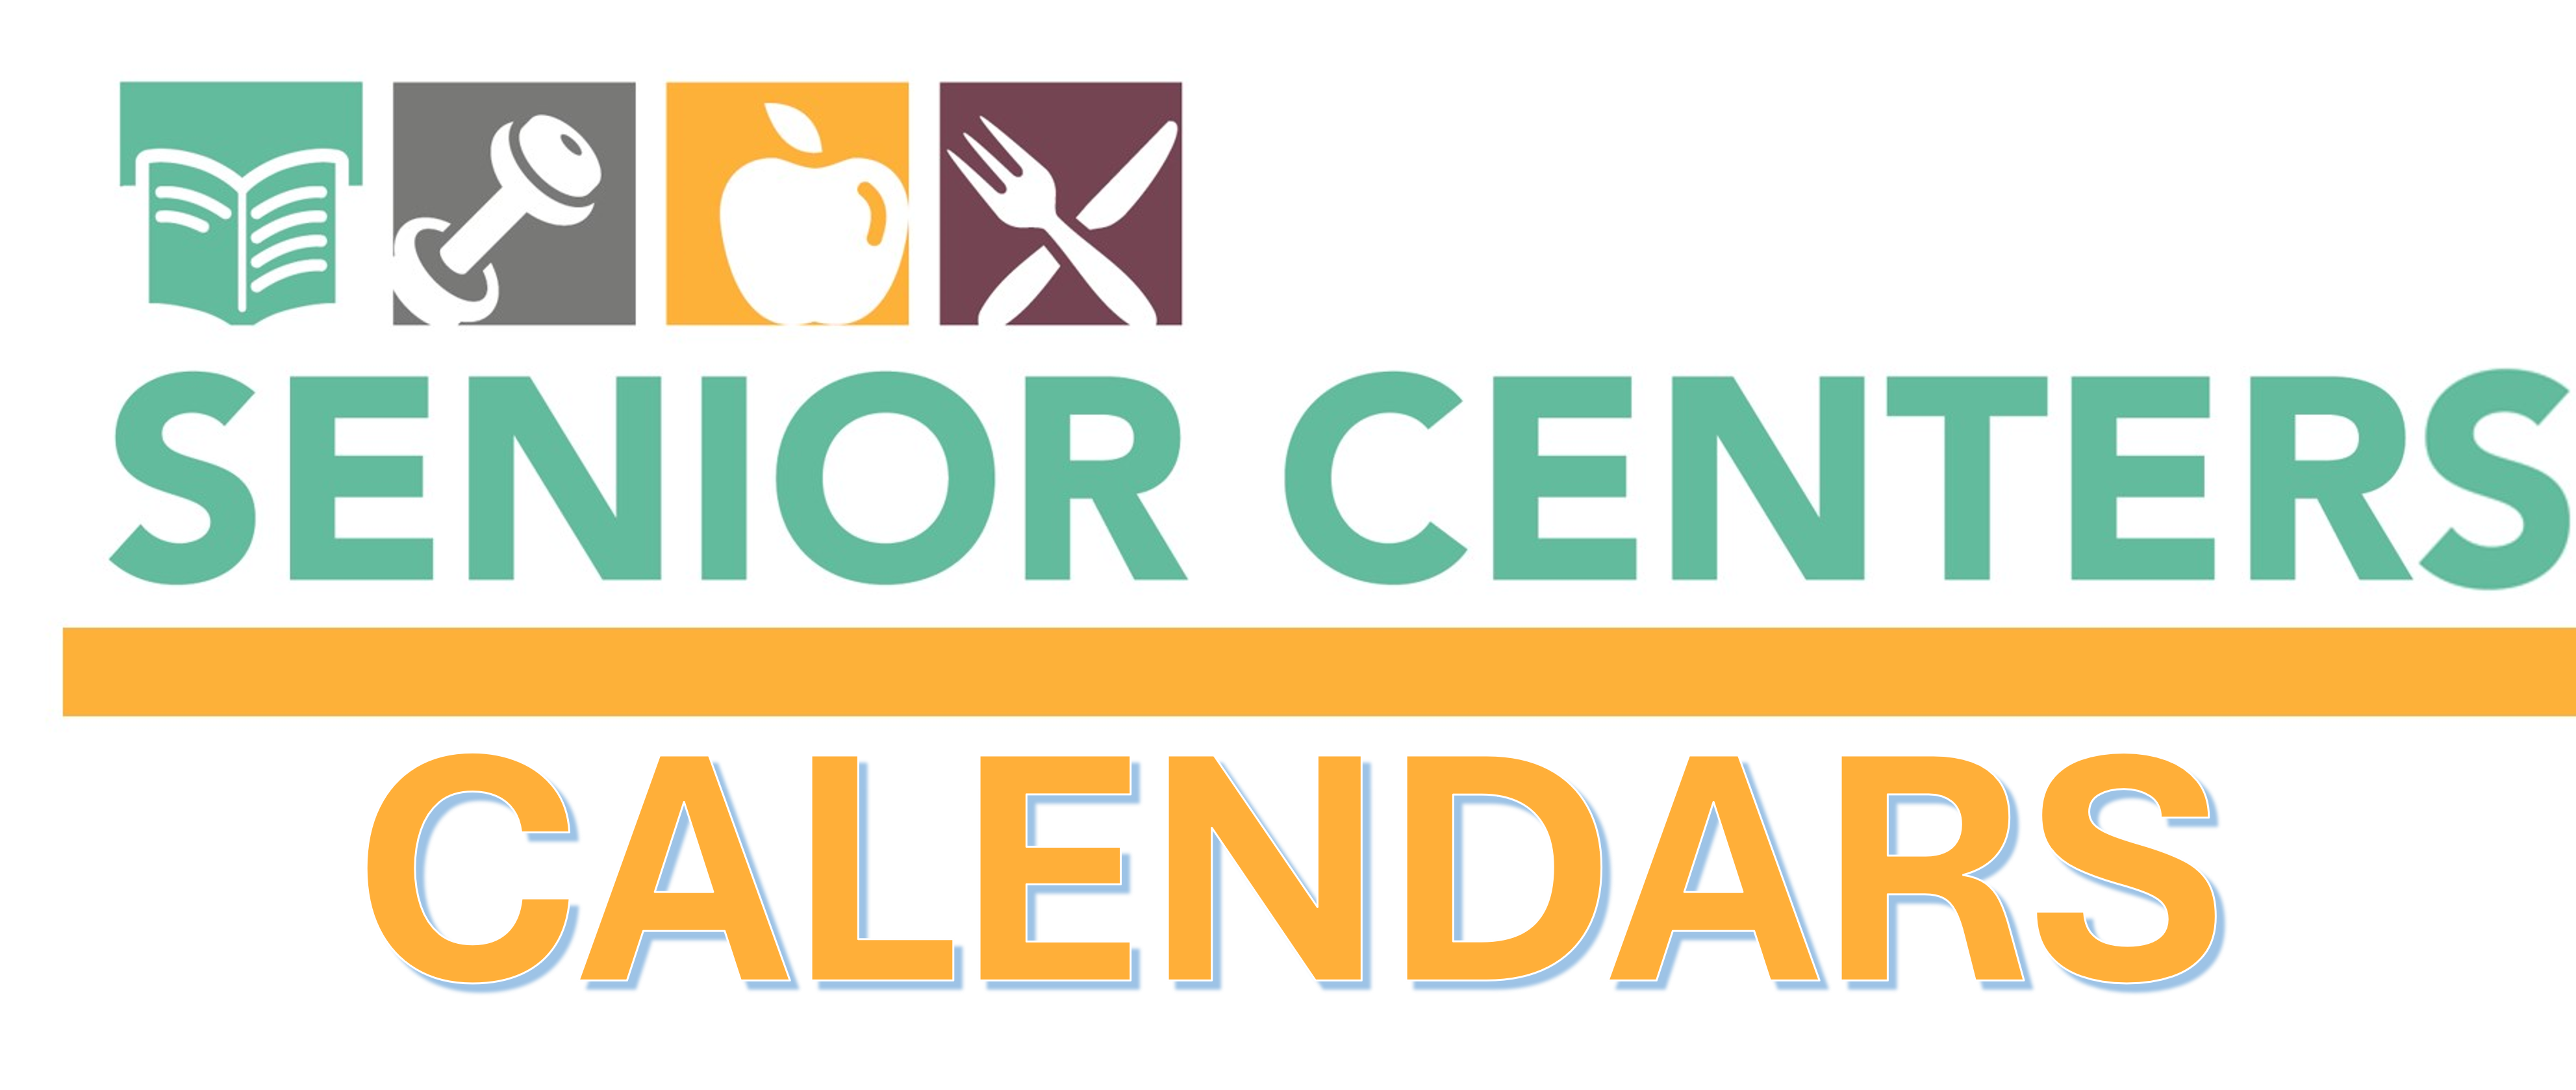 Baltimore City Senior Centers Calendars Baltimore City Health Department